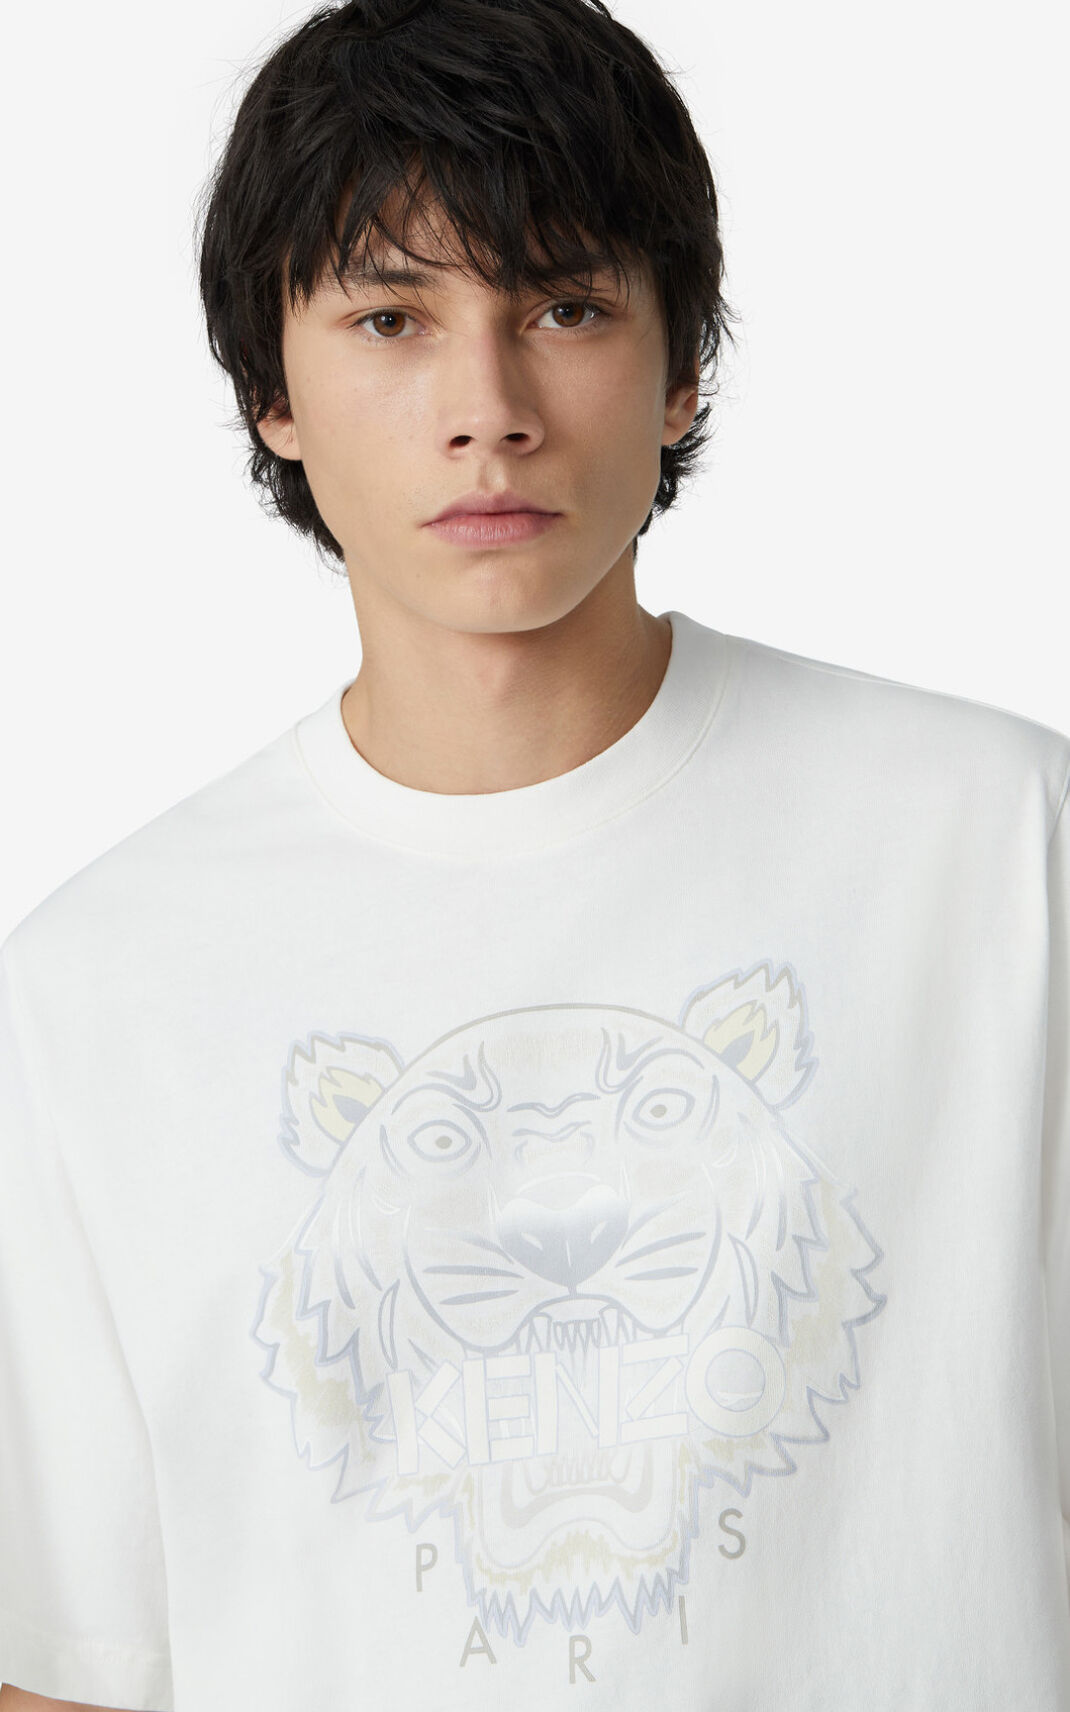 Kenzo Gradient 虎 Tシャツ メンズ 白 - JYLZIA659